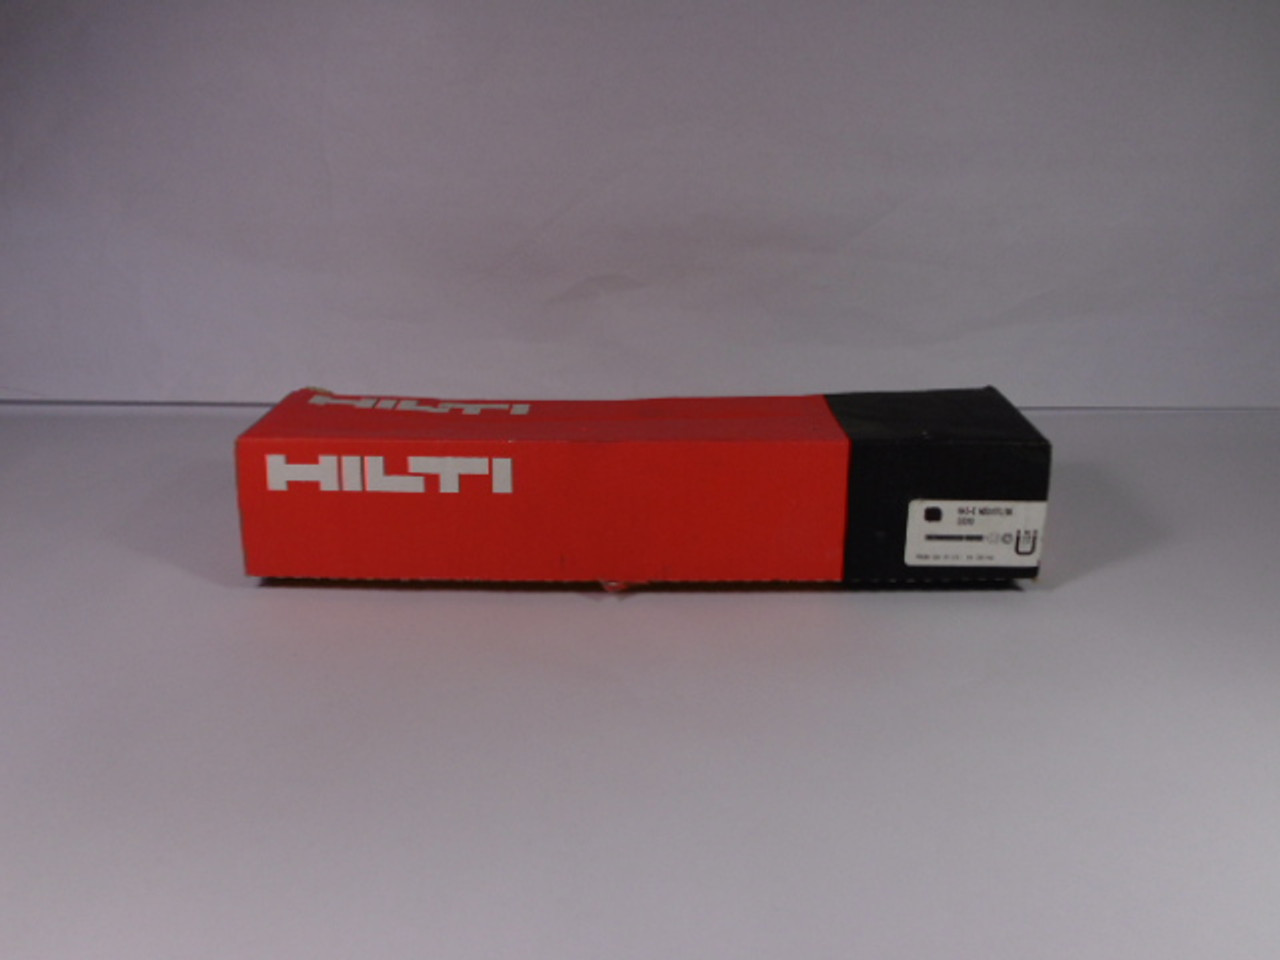 Hilti HAS-E Rod M20x170/68 Sold Individually ! NOP !